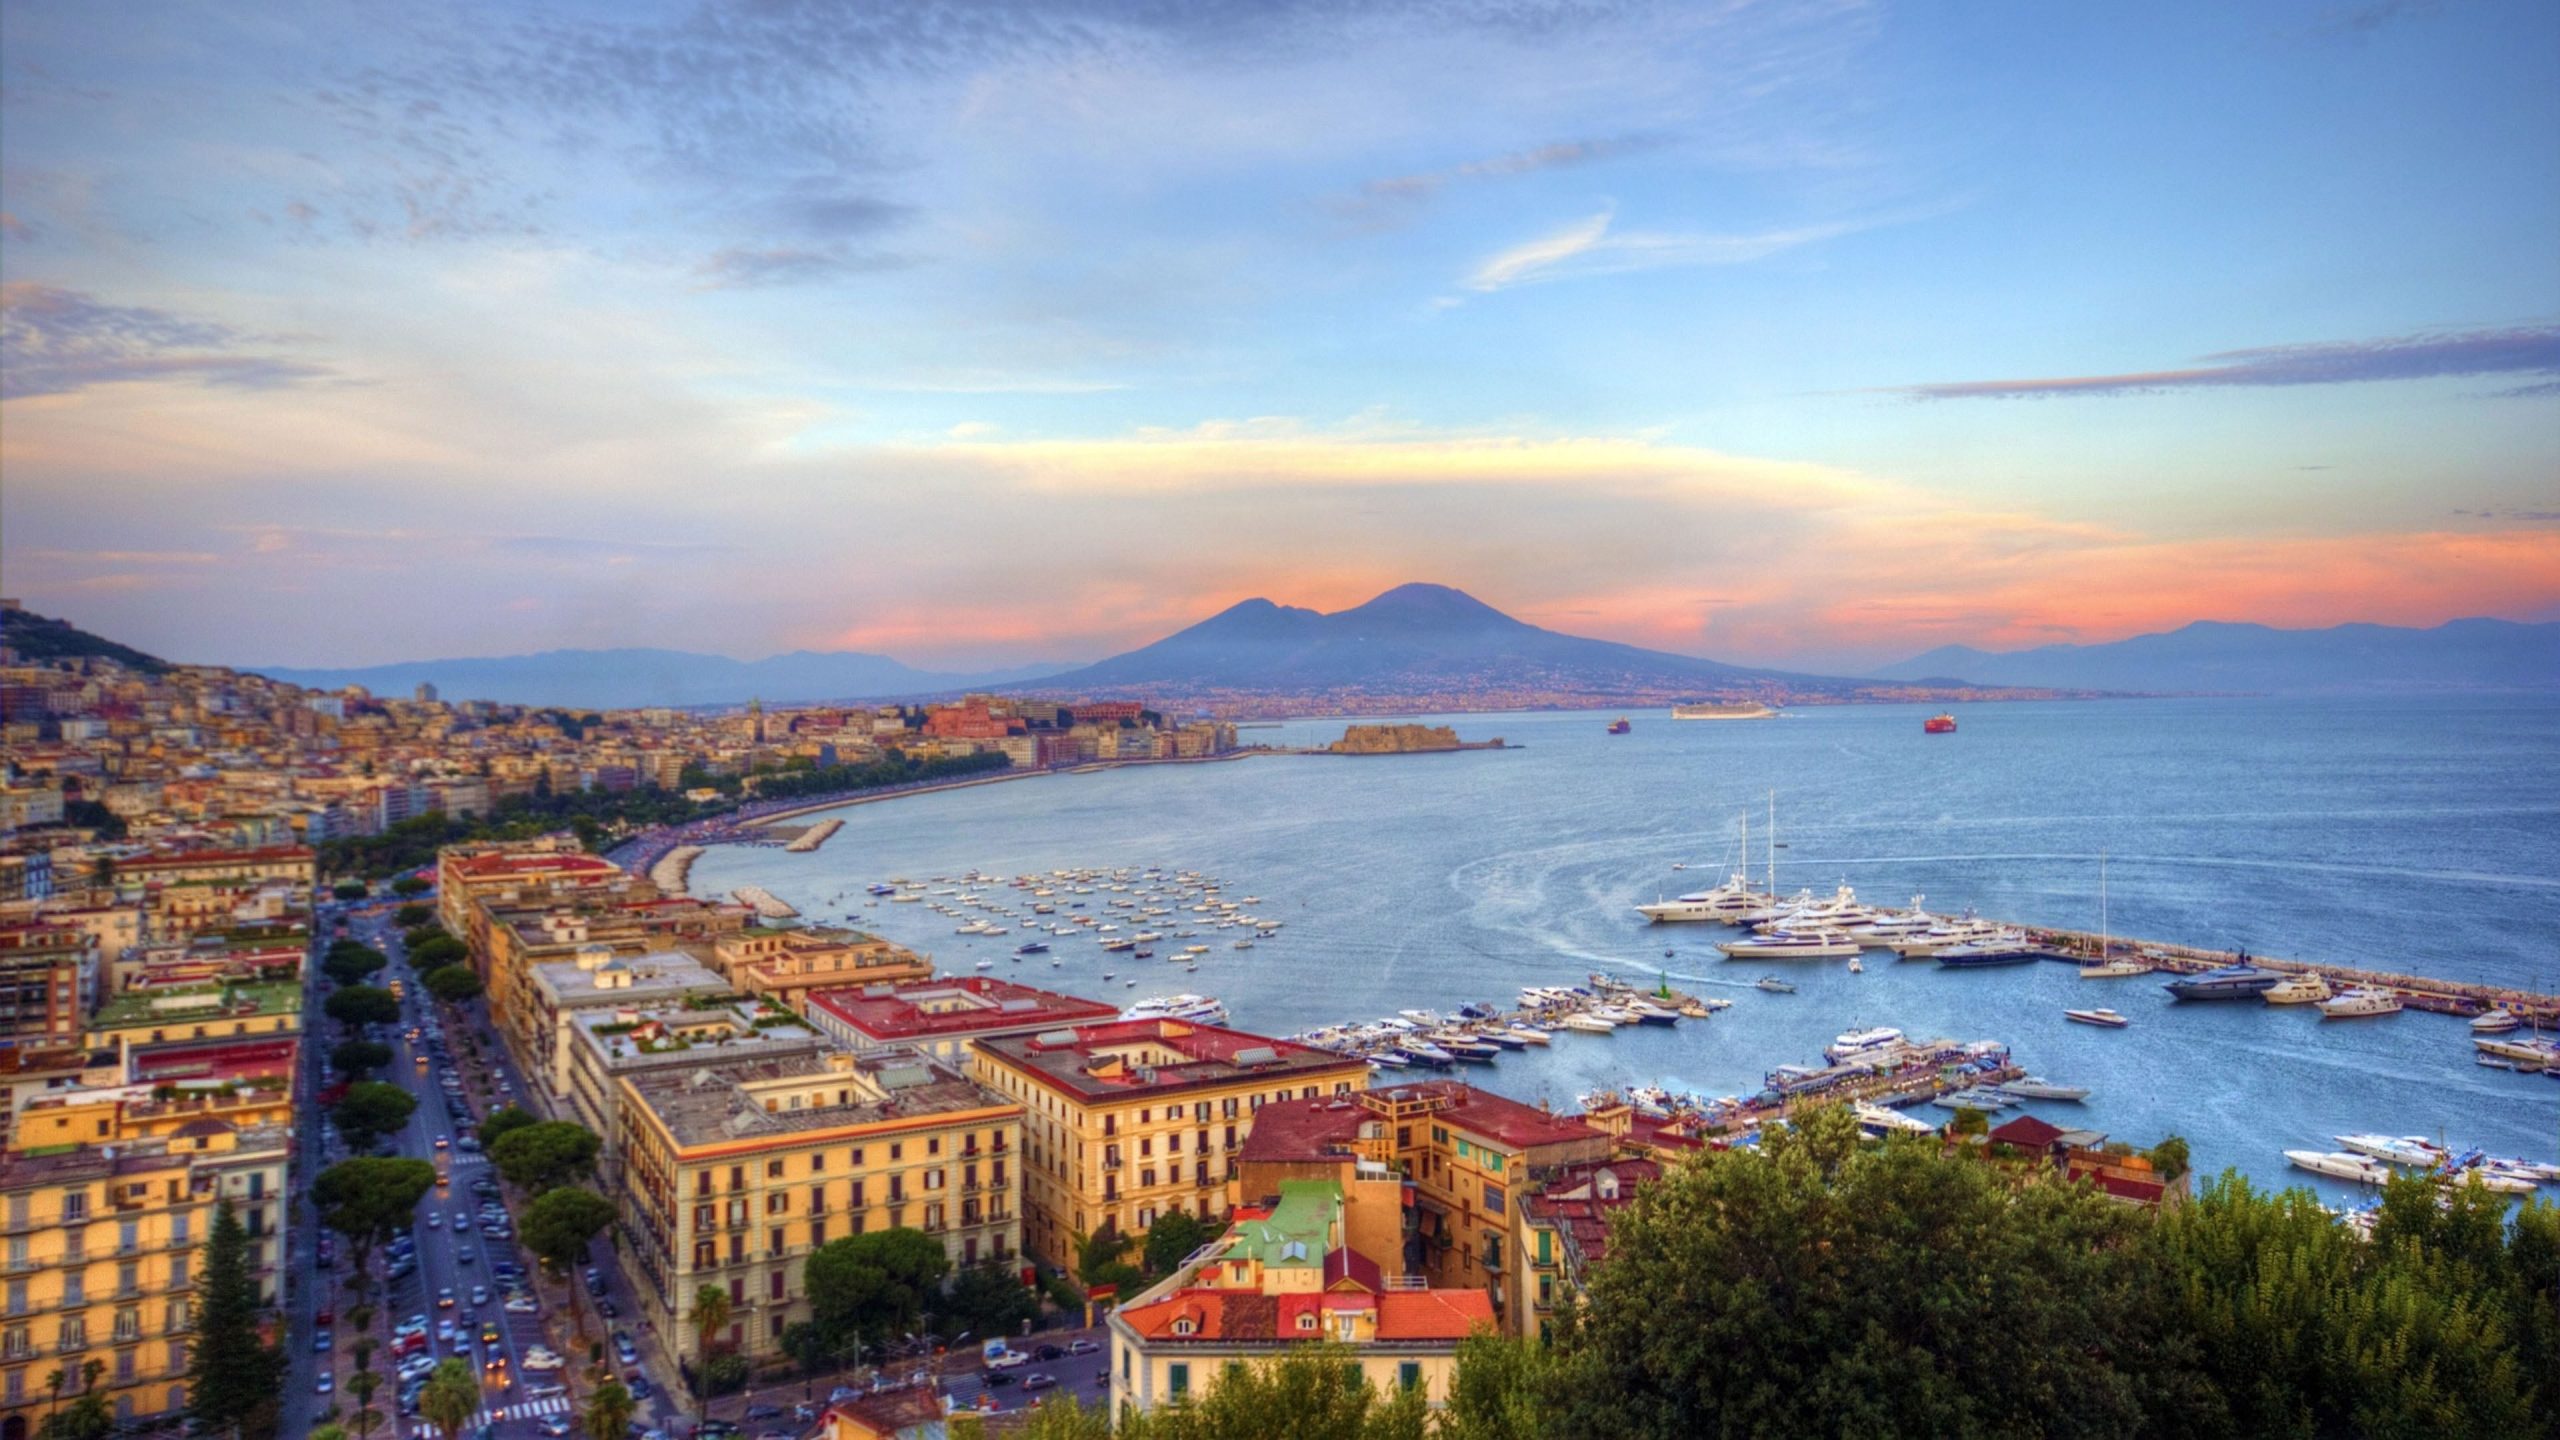 Wallpaper Naples Coastal City In Italy And Mount Vesuvius